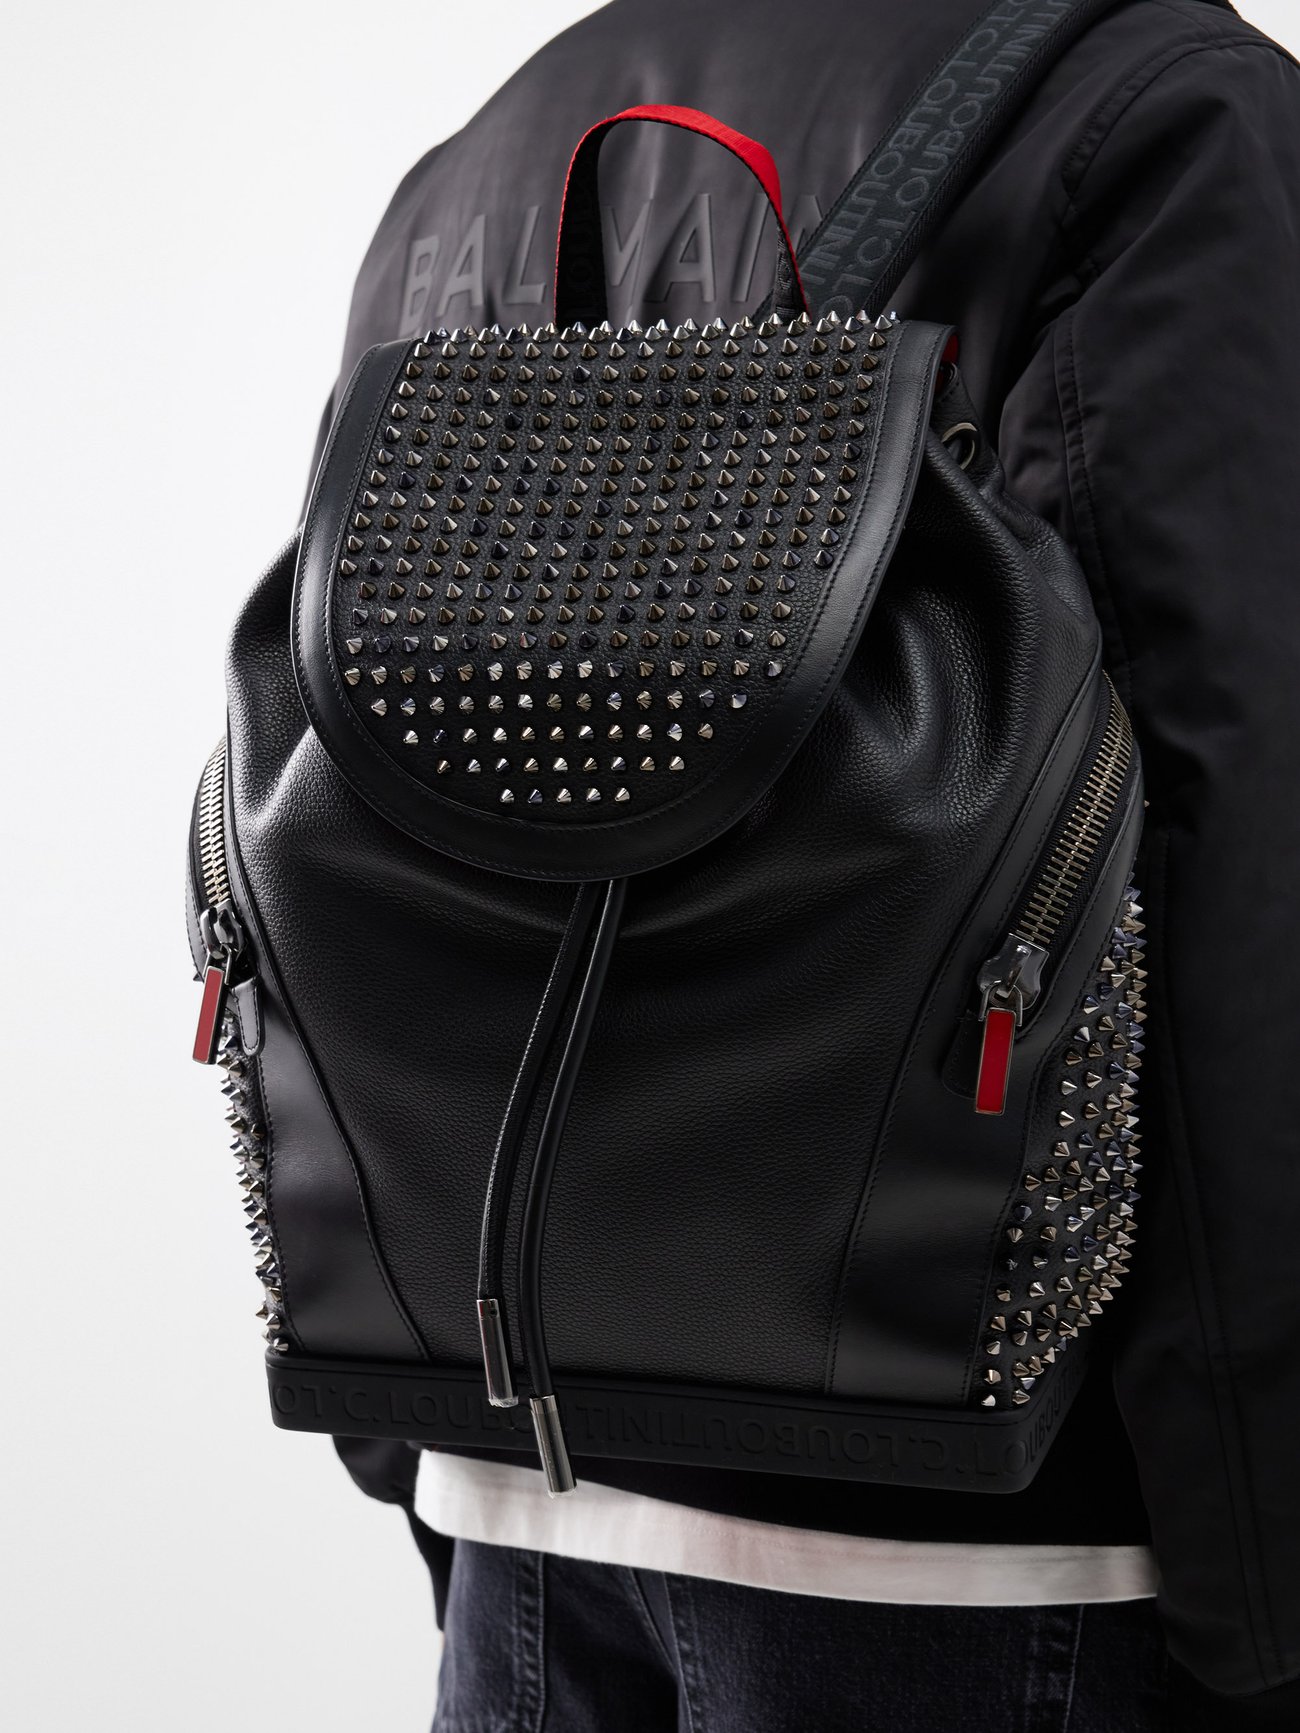 Explorafunk Studded Full-Grain Leather Backpack